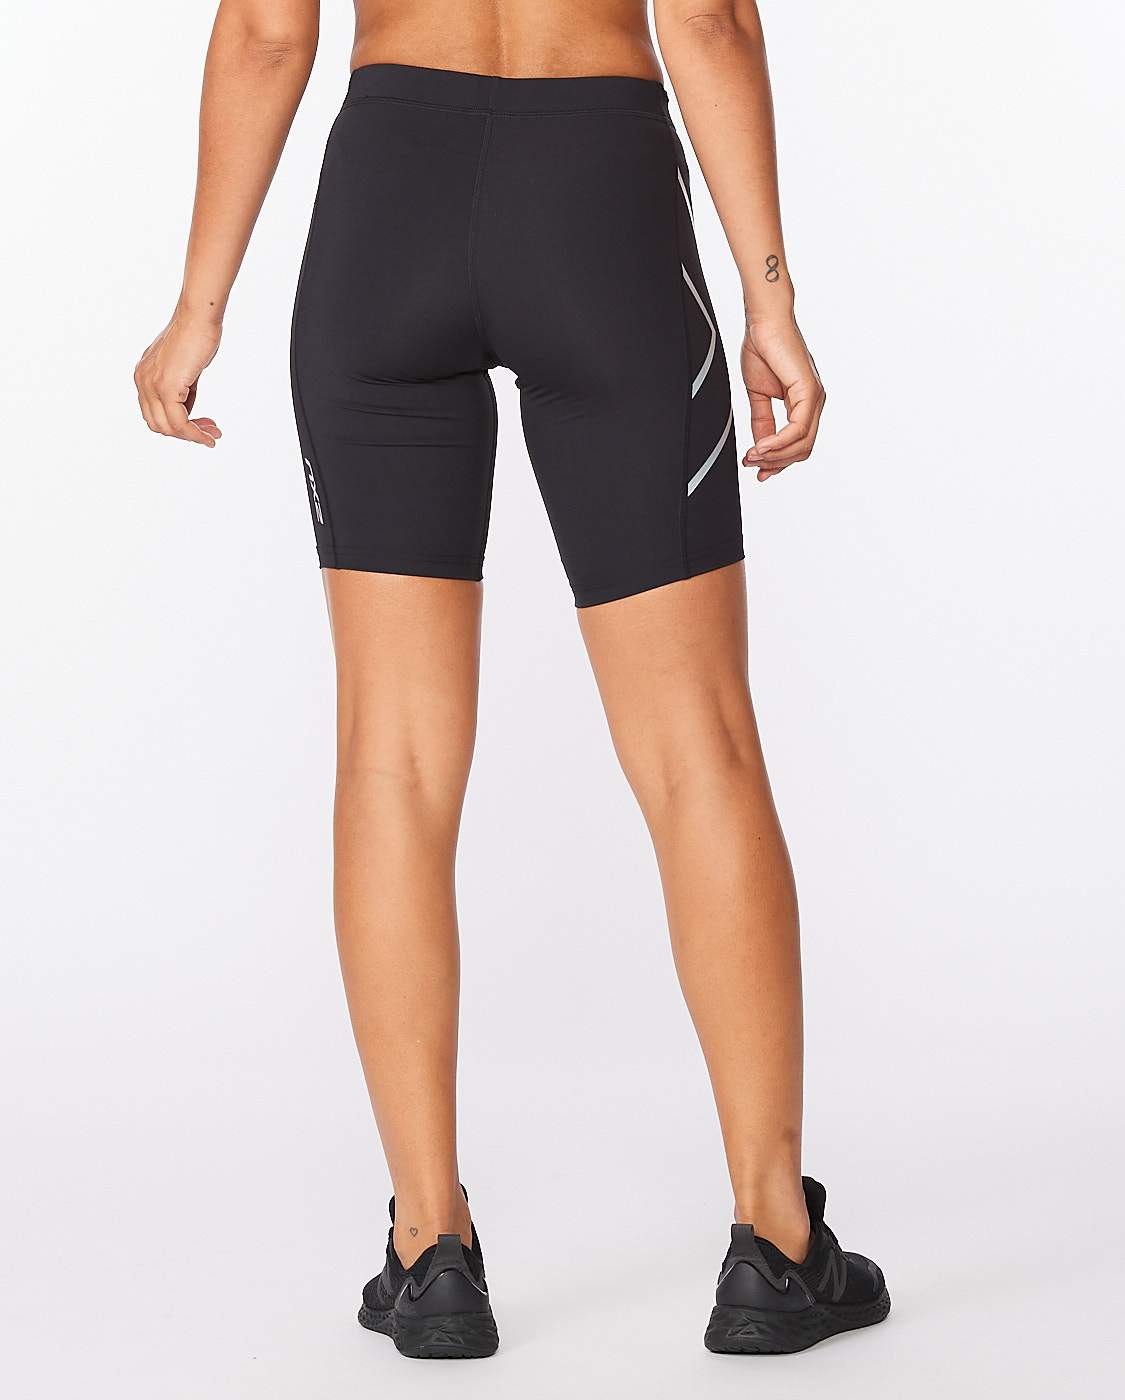 2XU Women's Core Compression Shorts WA4176B Black/Silver XS 